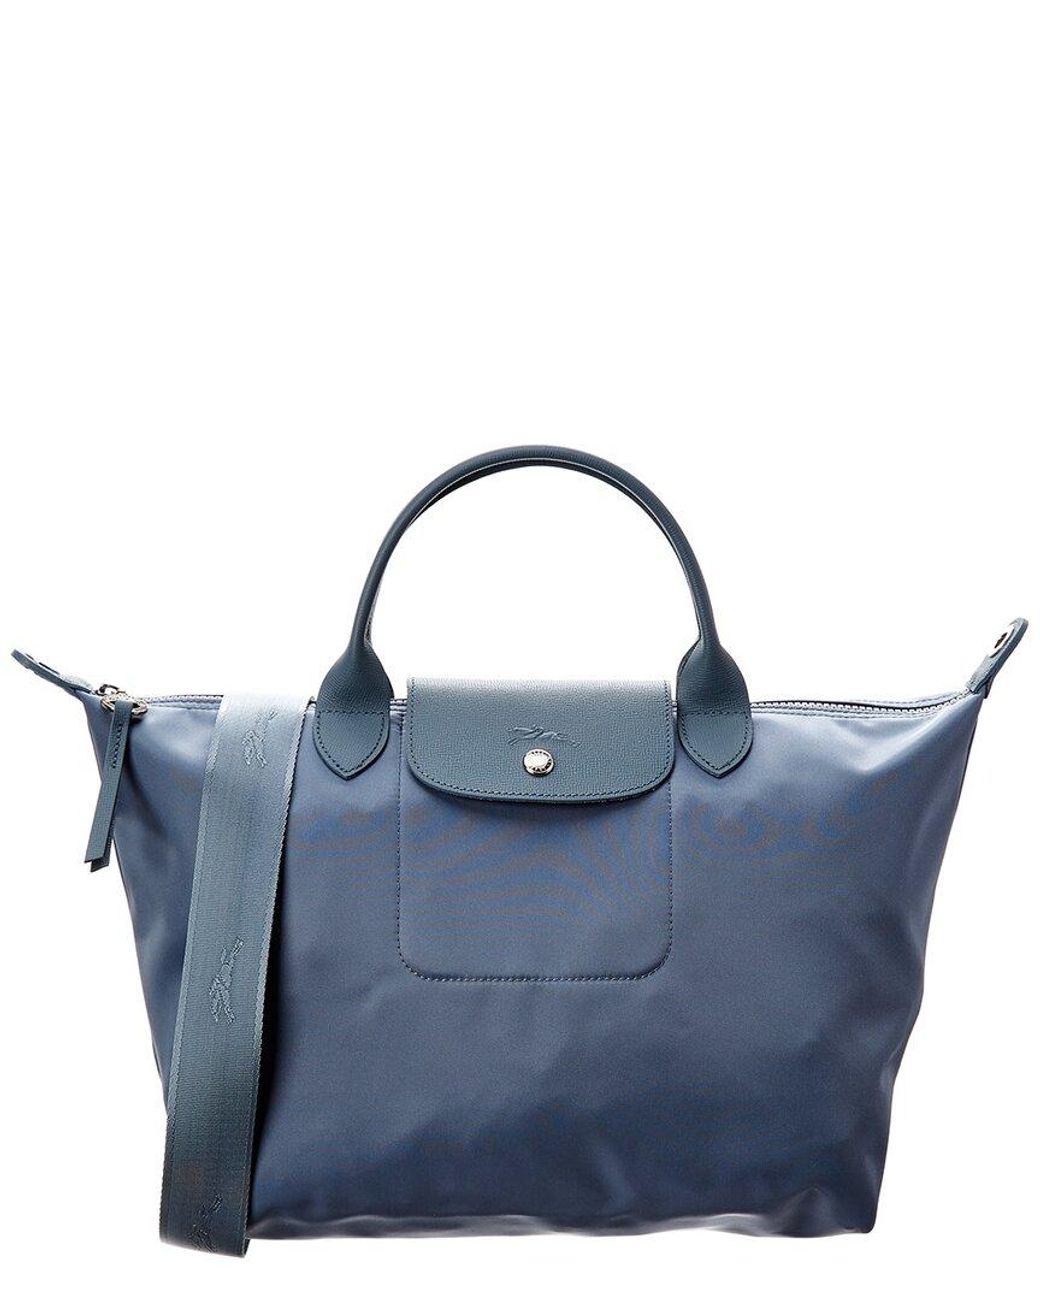 Longchamp Synthetic Le Pliage Medium Nylon Short Handle Tote in Blue - Lyst